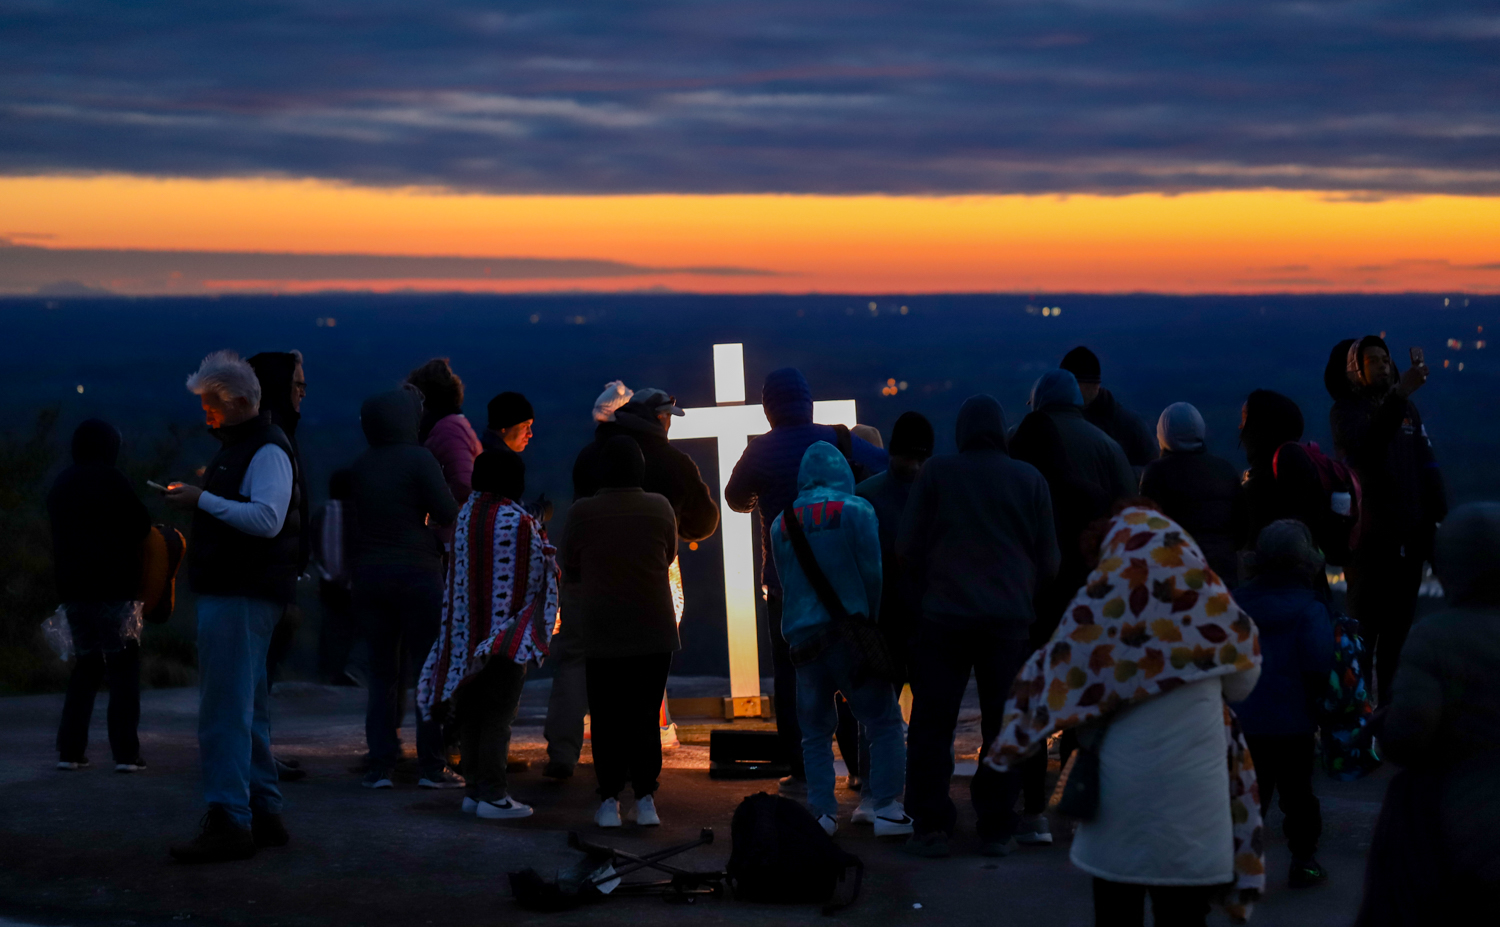 PHOTOS: Easter sunrise service atop Stone Mountain